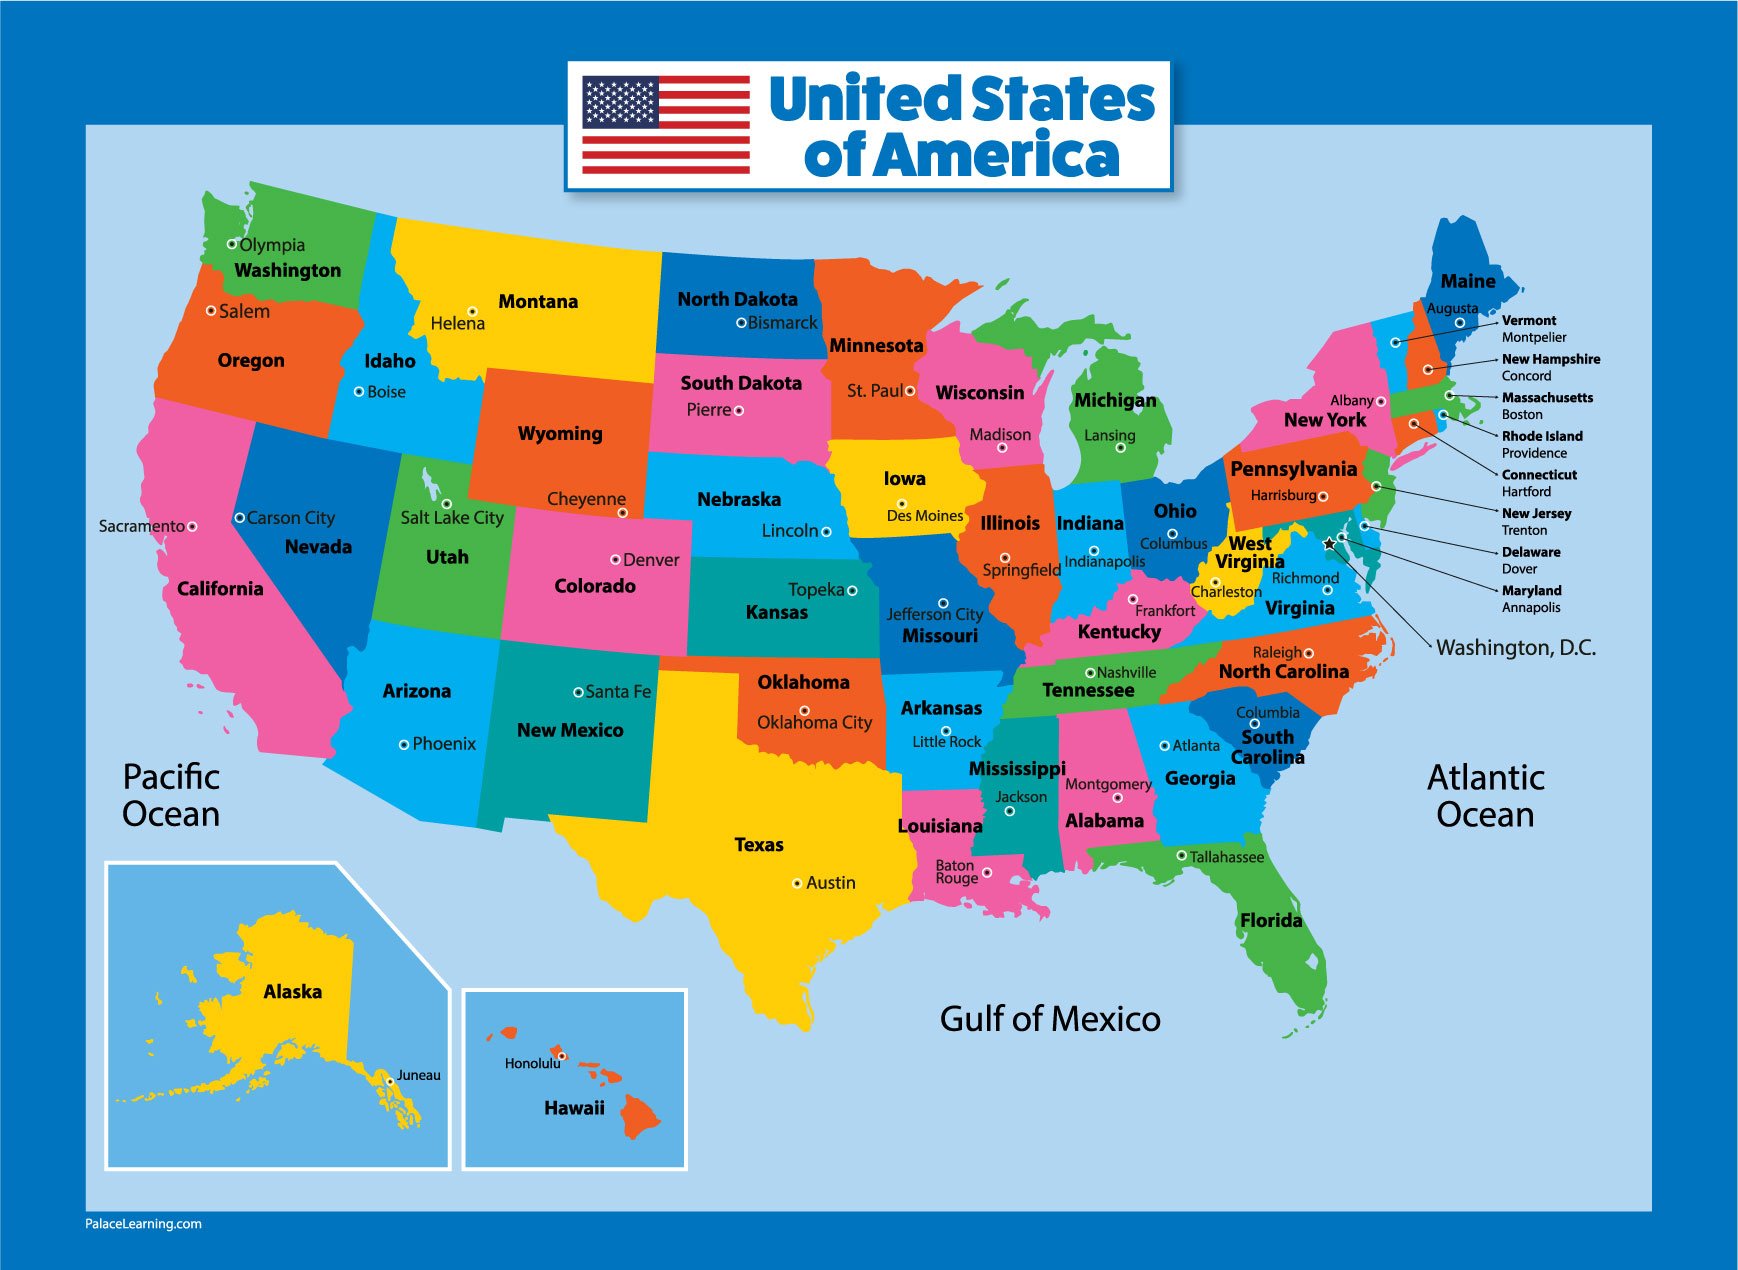 Mugshots in the USA United States Mugshot